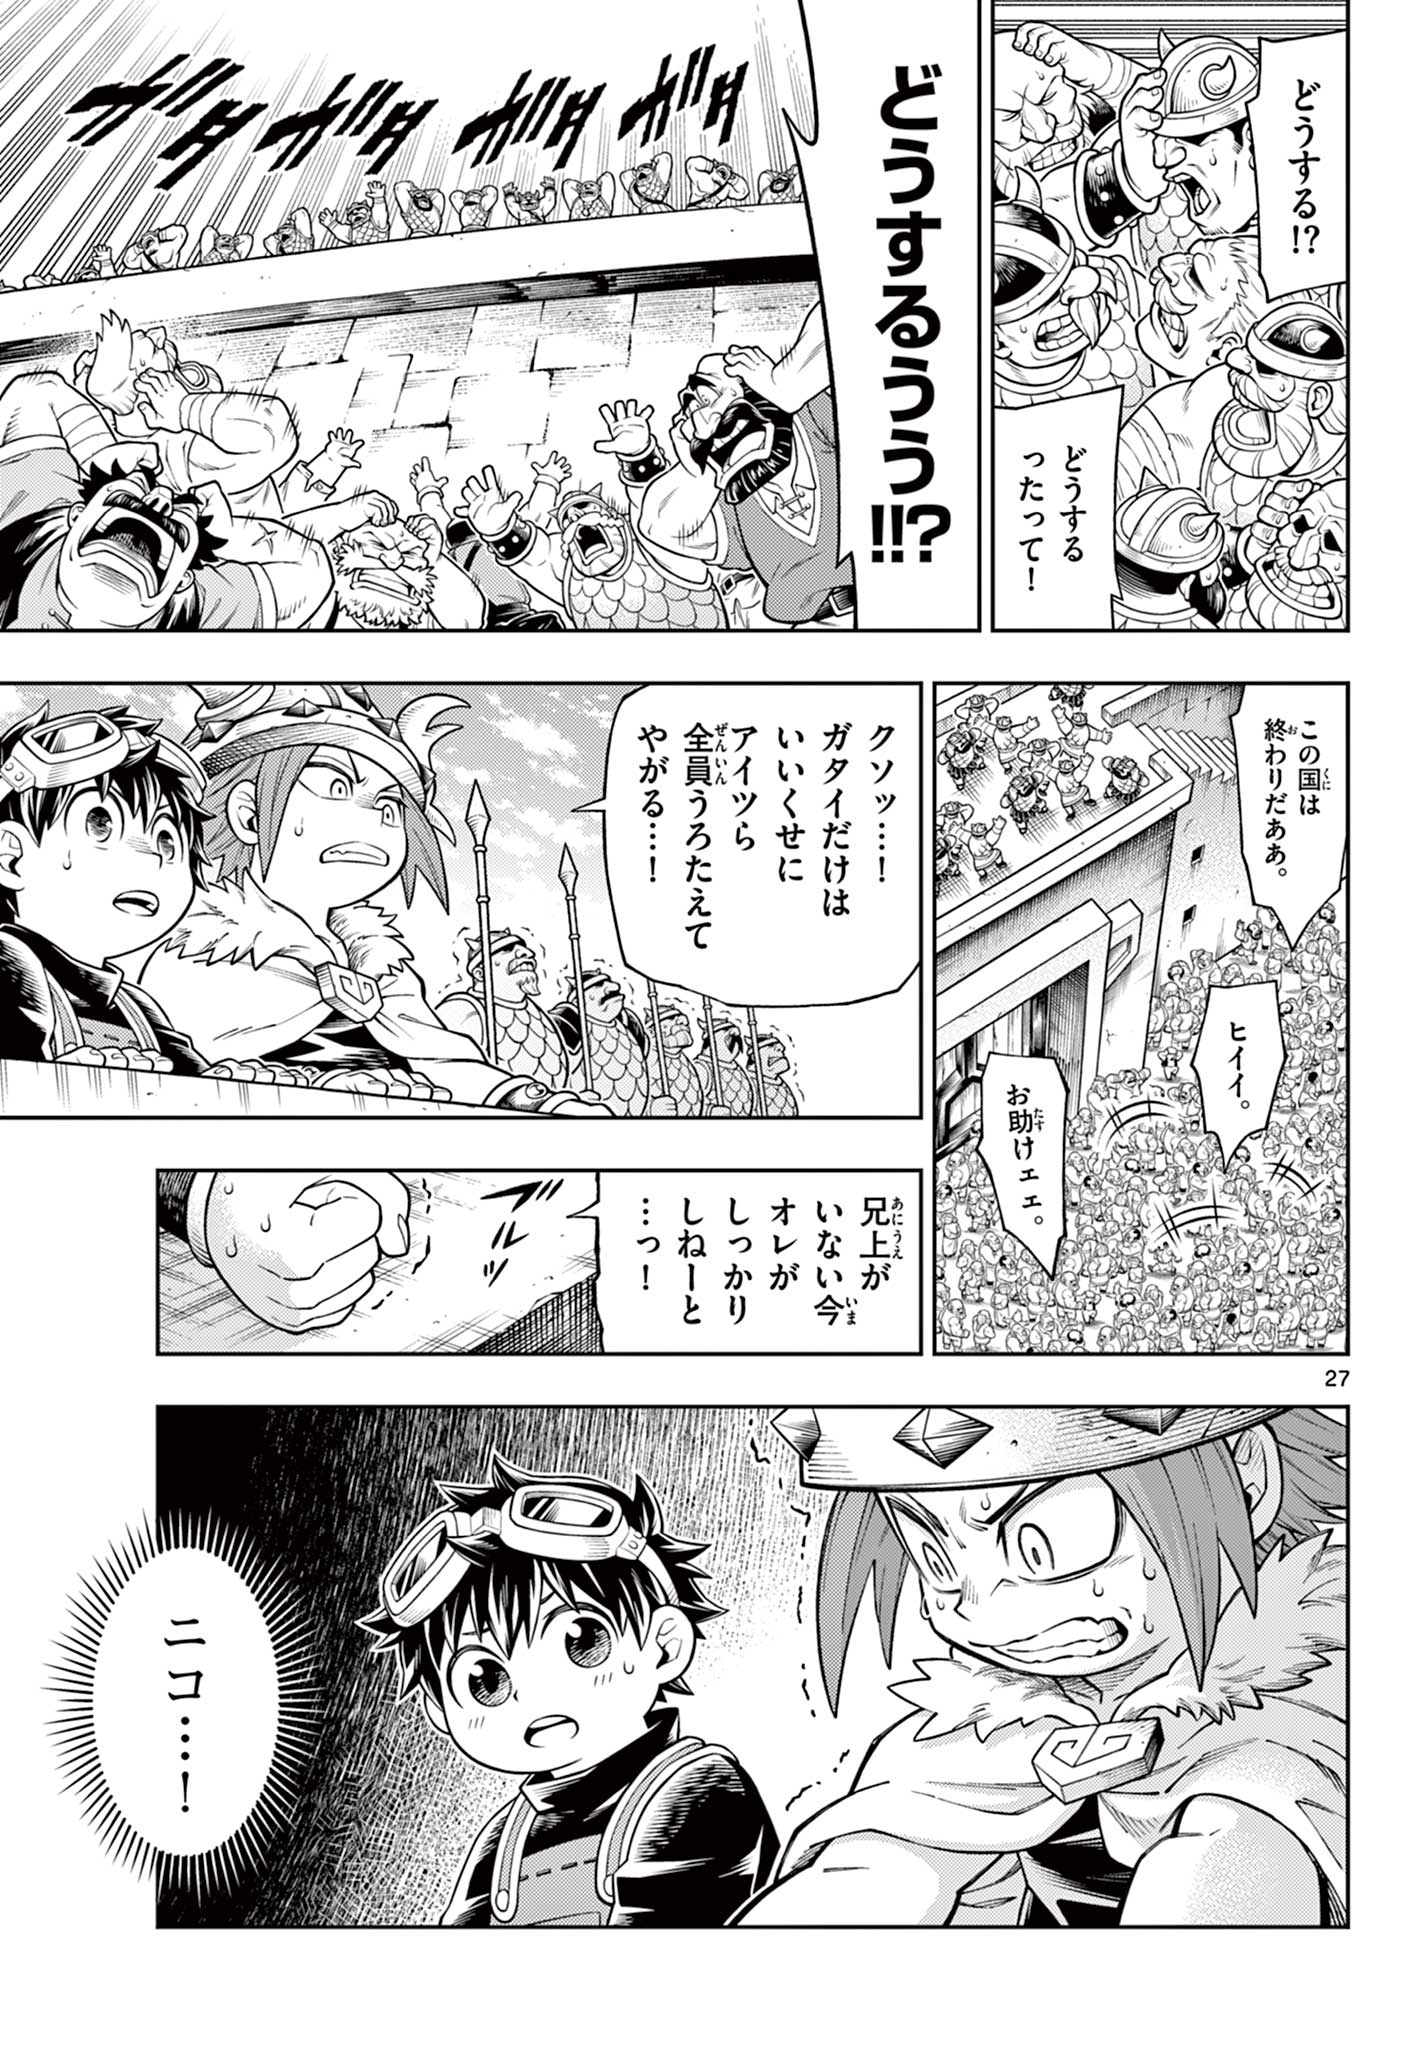 Soara to Mamono no ie - Chapter 26 - Page 27